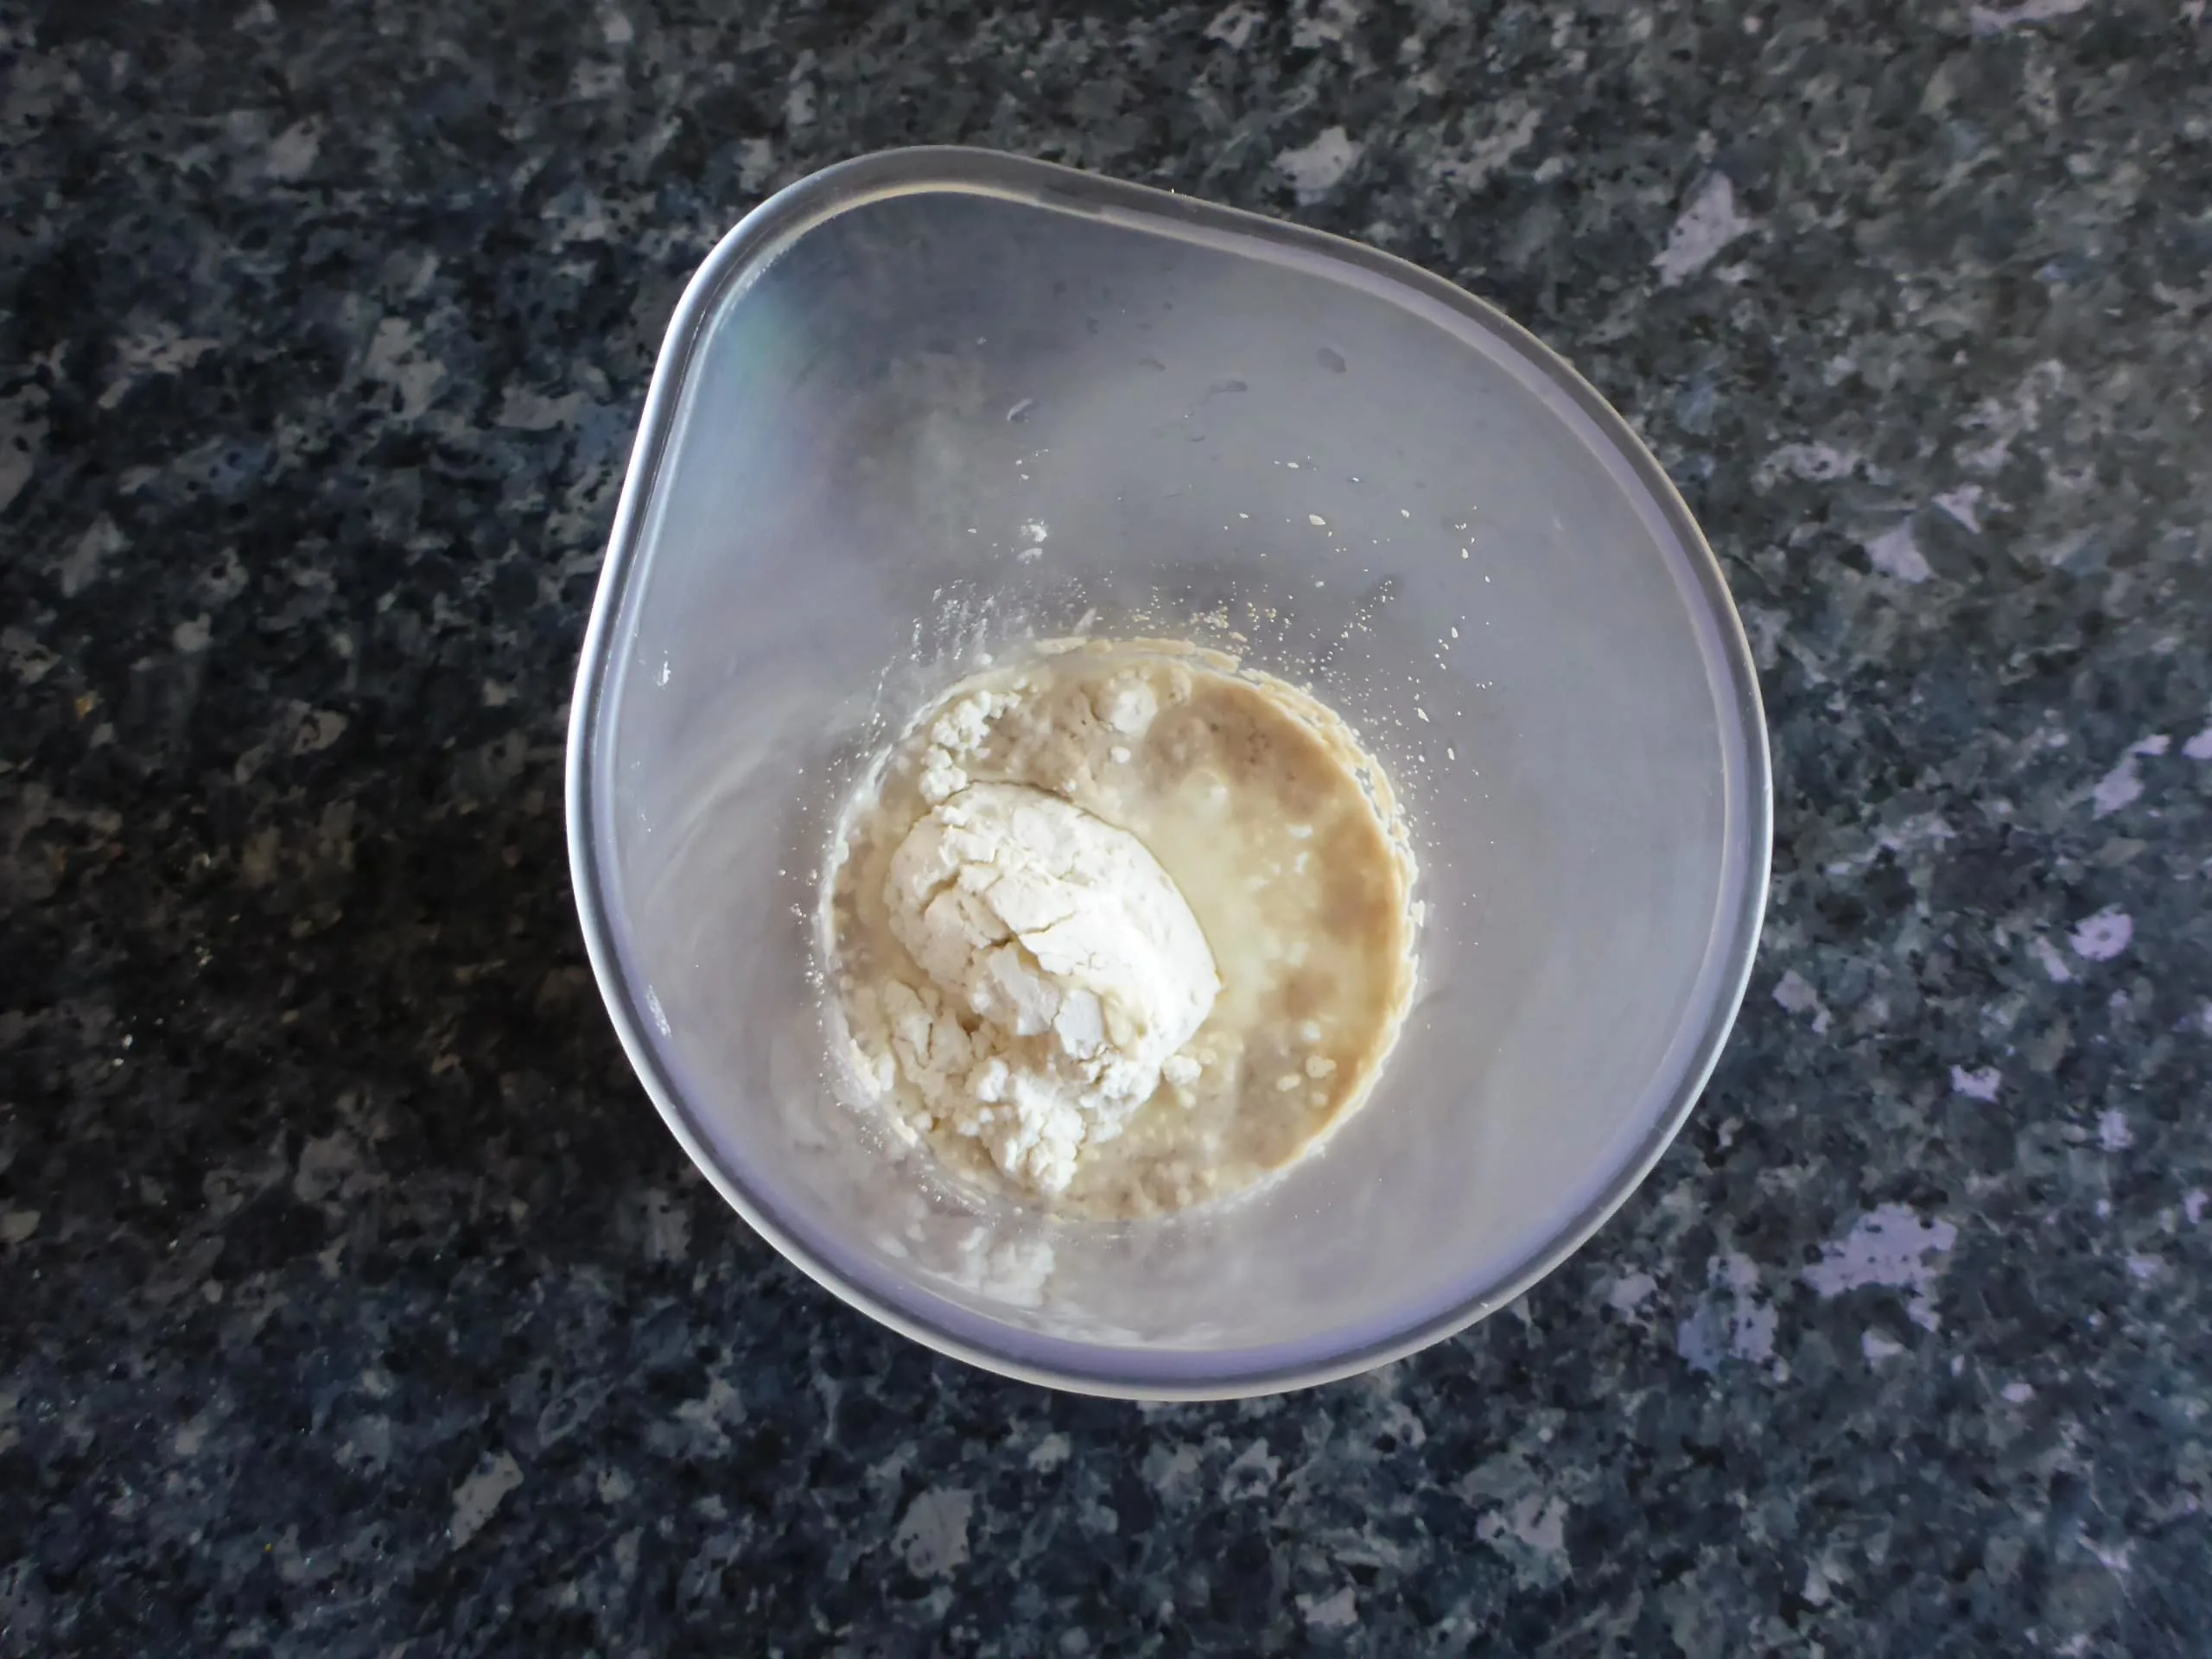 How to activate Dry Yeastt to make fresh wild garlic bread recipe.